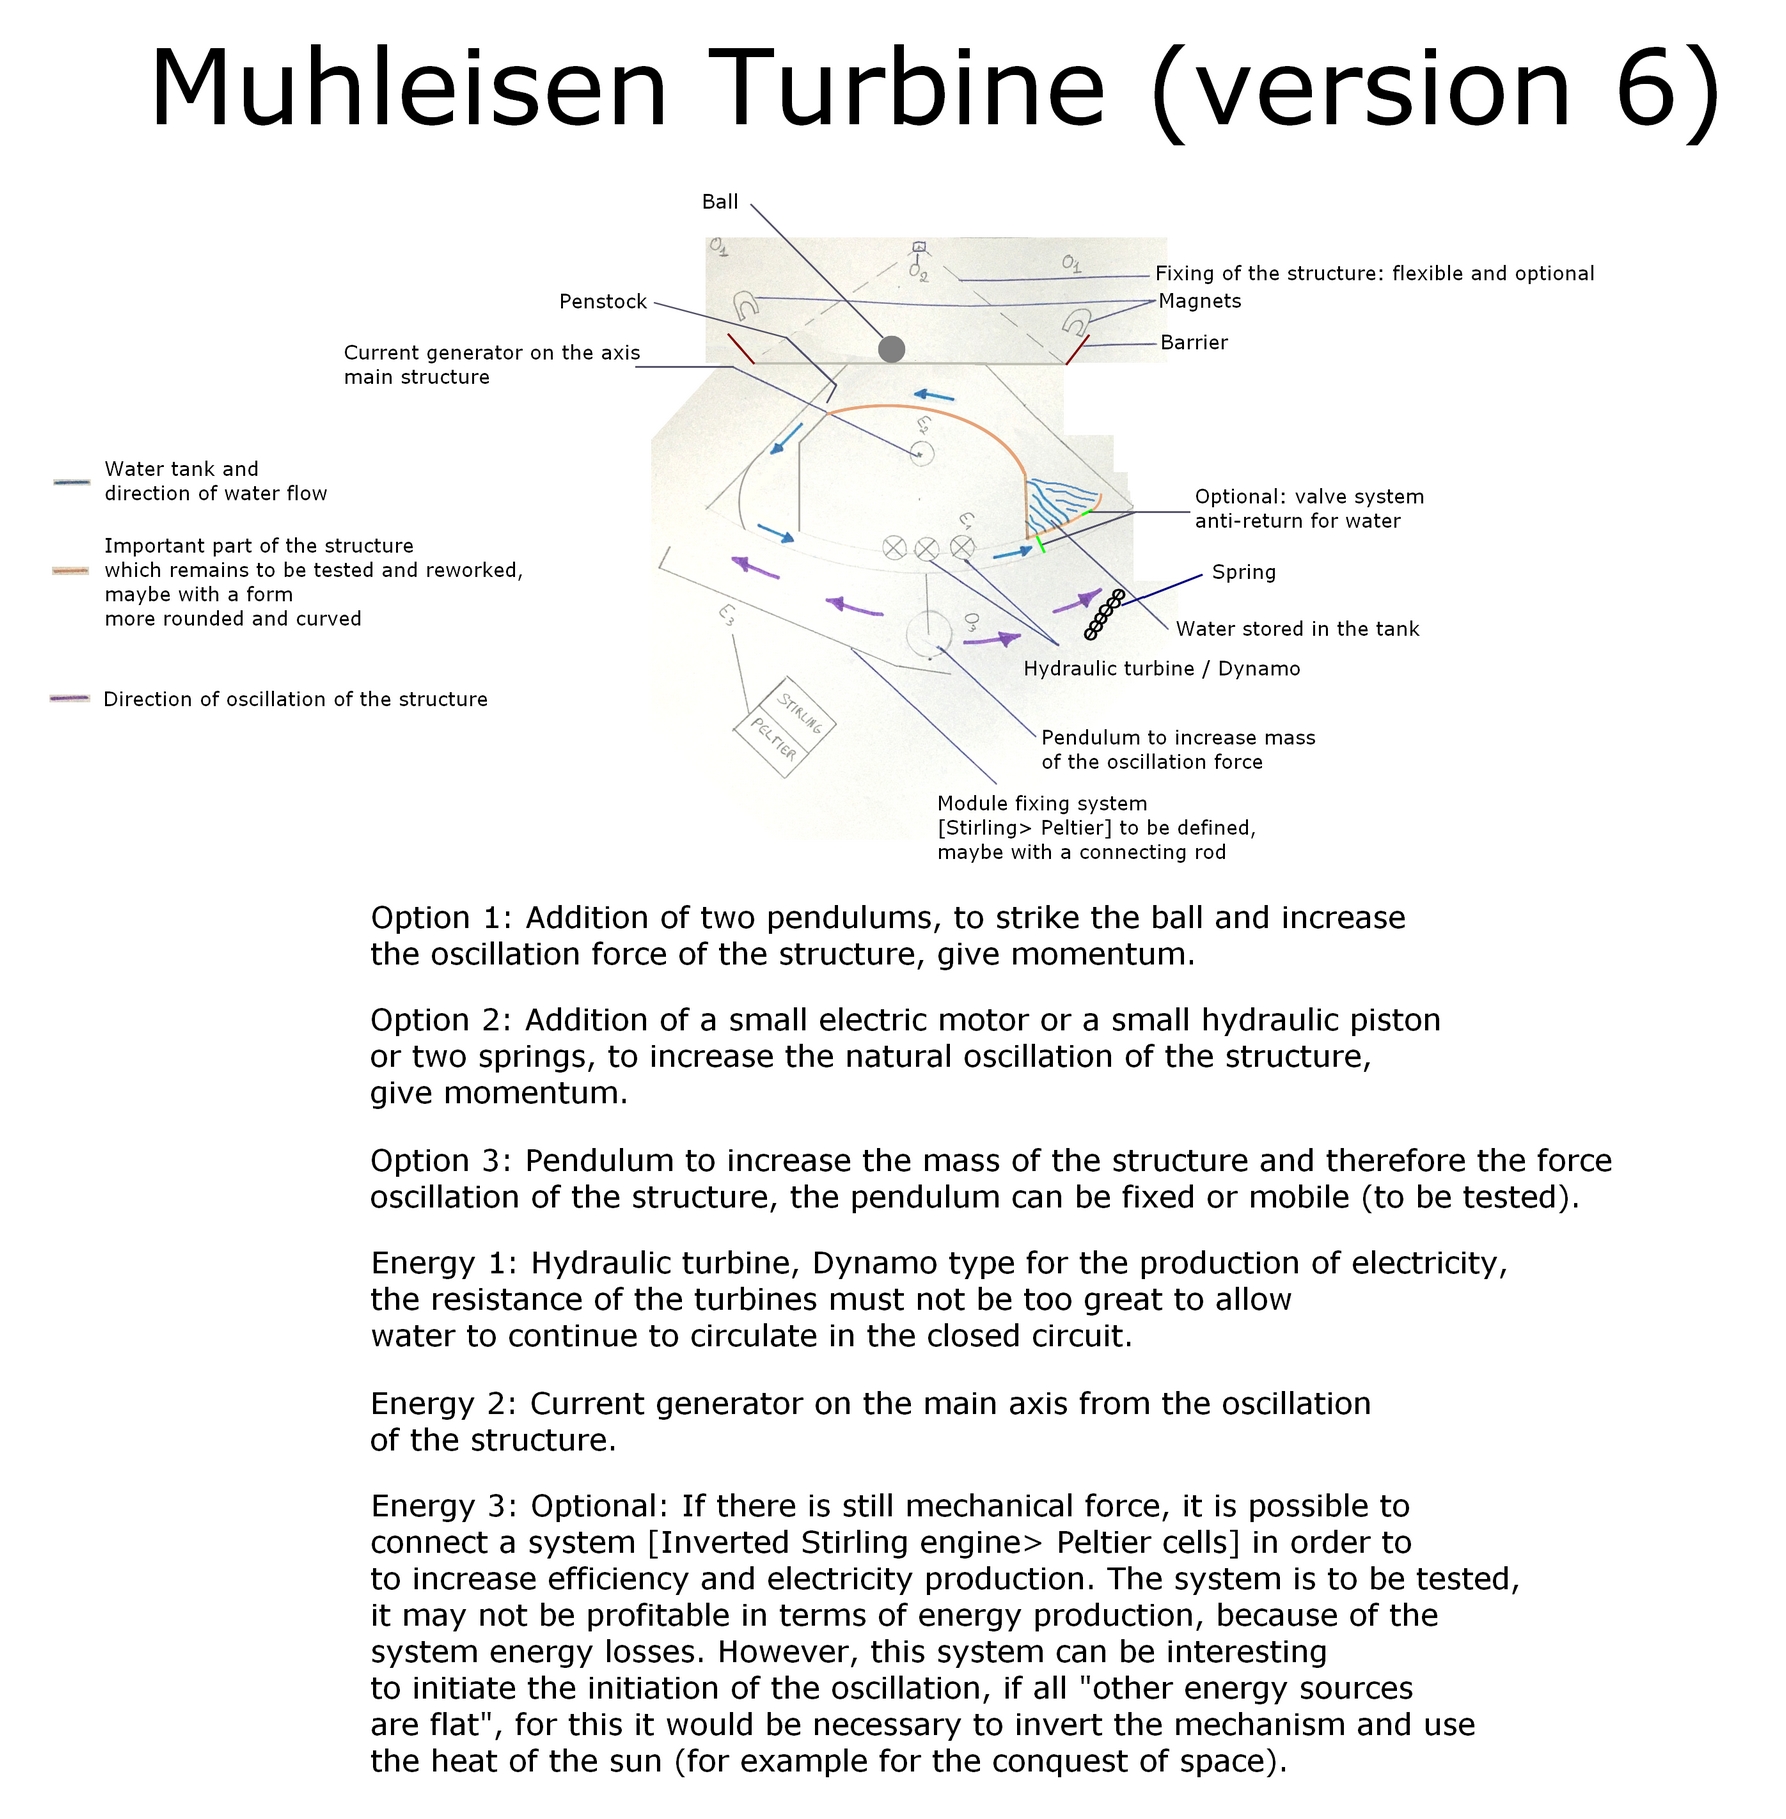 The Muhleisen Turbine version 6